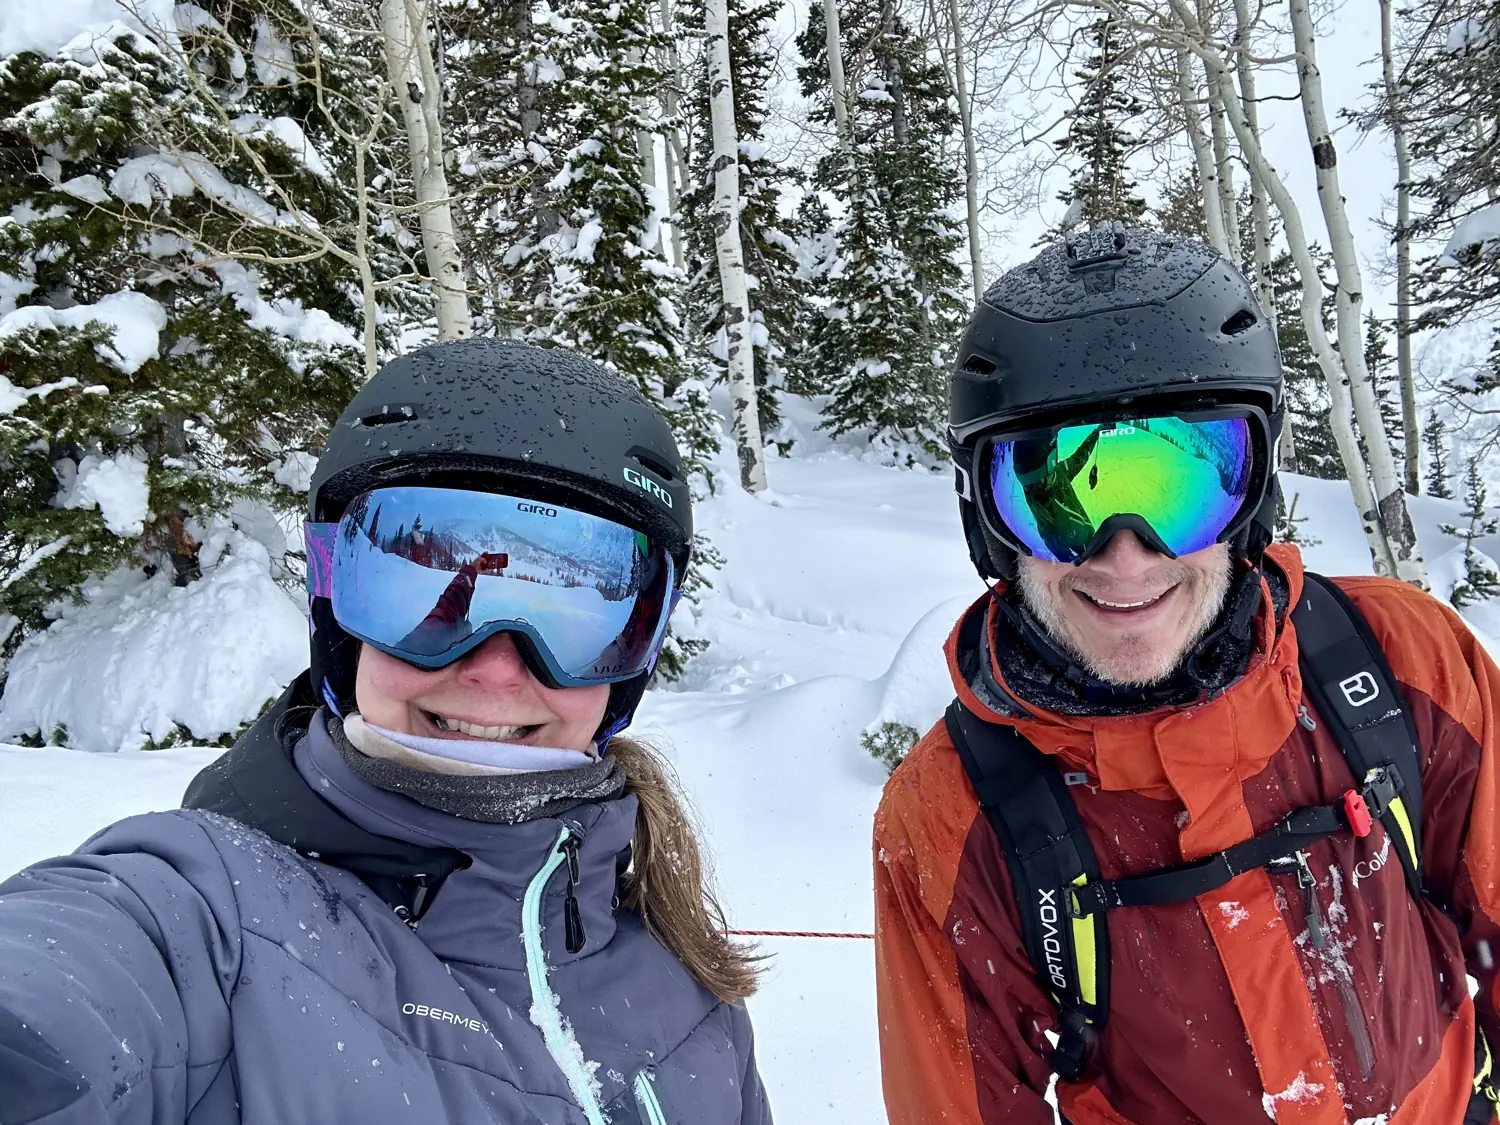 Keith and Lindsey are enjoying some fresh snow at Snowbird Ski Resort